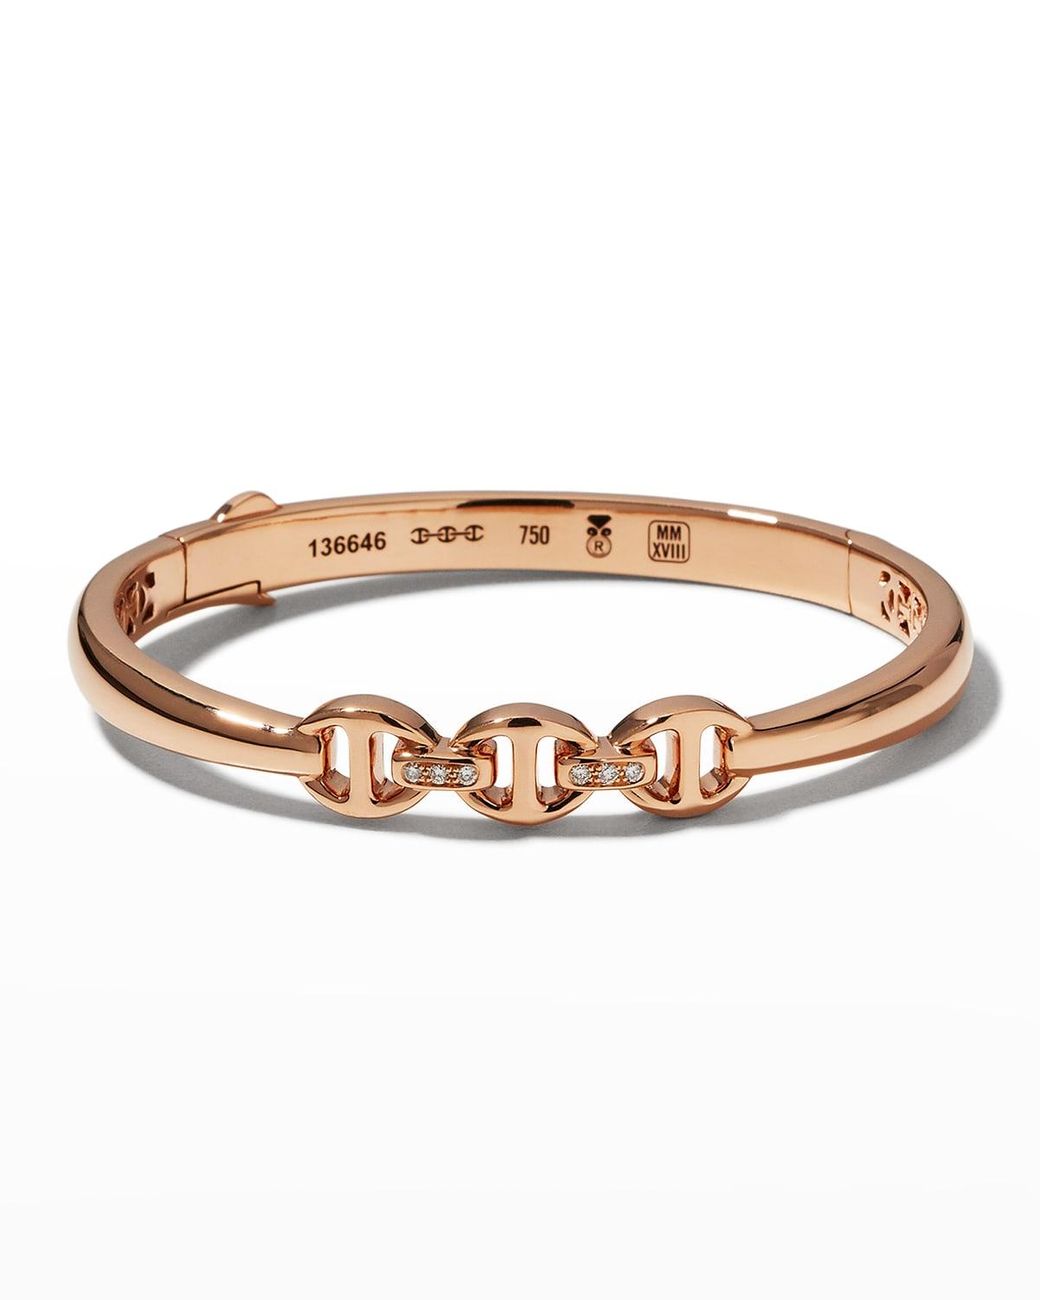 Hoorsenbuhs Sirkel 18k Rose Gold Diamond Tri-link Bridge Bracelet in ...